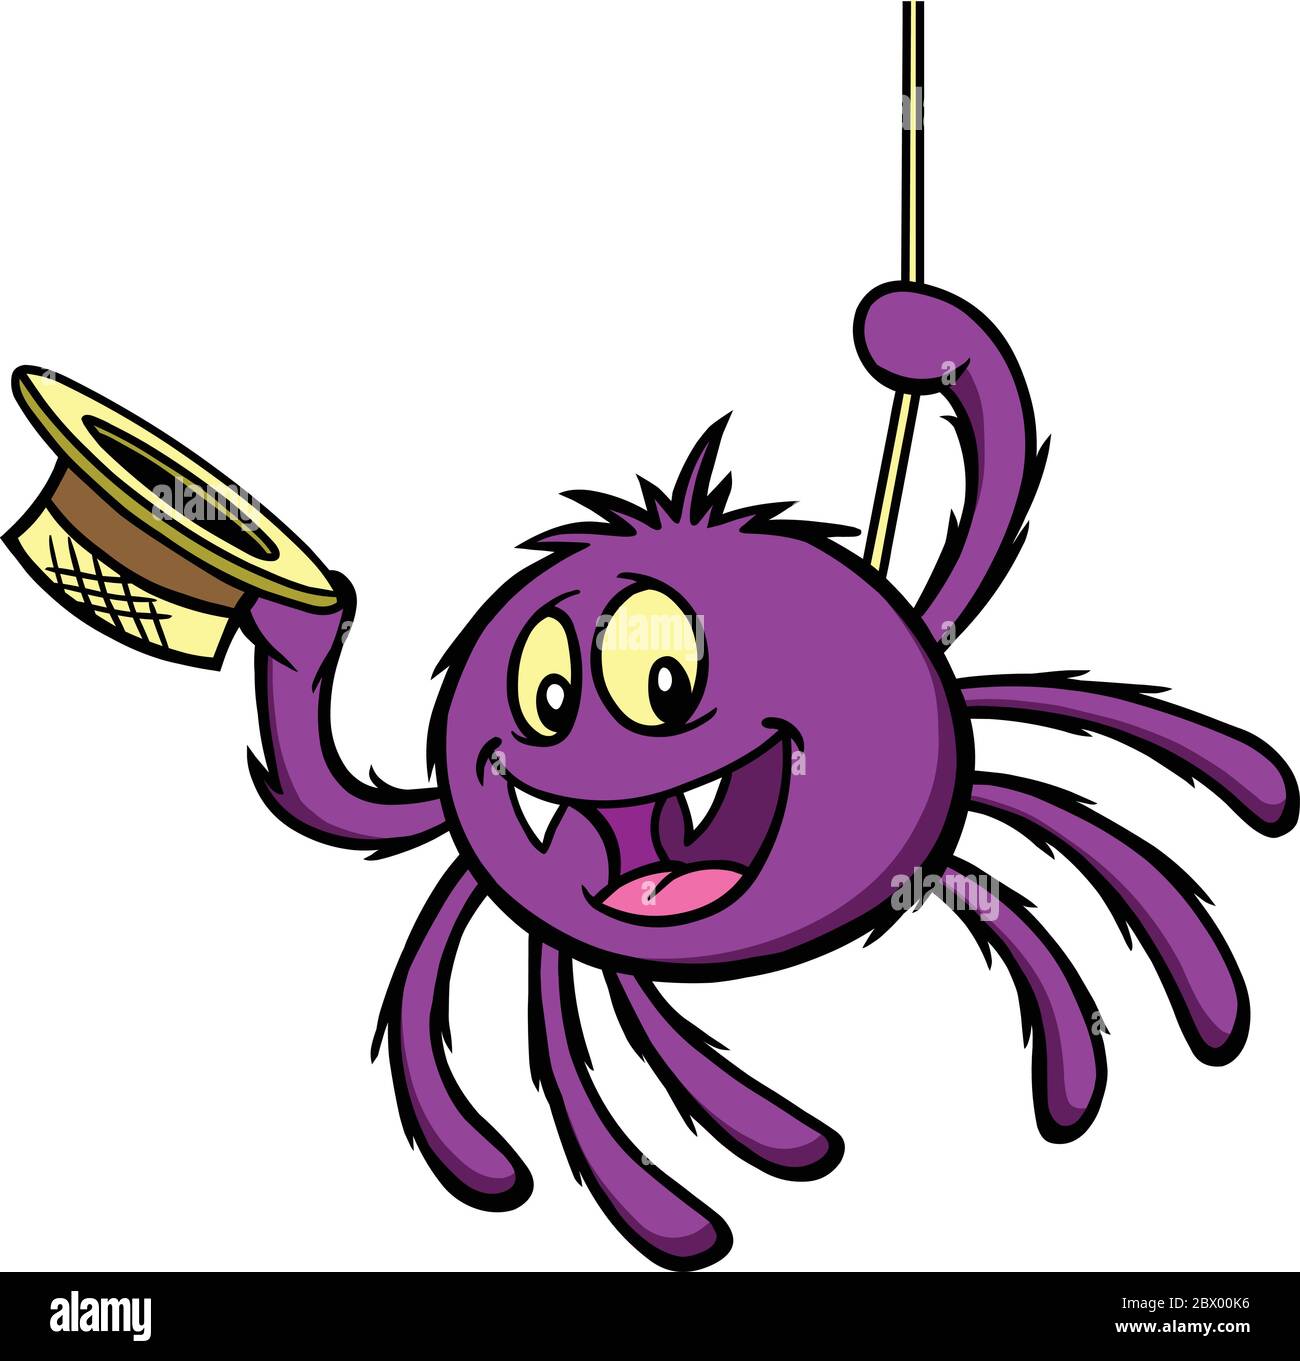 Itsy Bitsy Spider- A Cartoon Illustration of an Itsy Bitsy Spider. Stock Vector